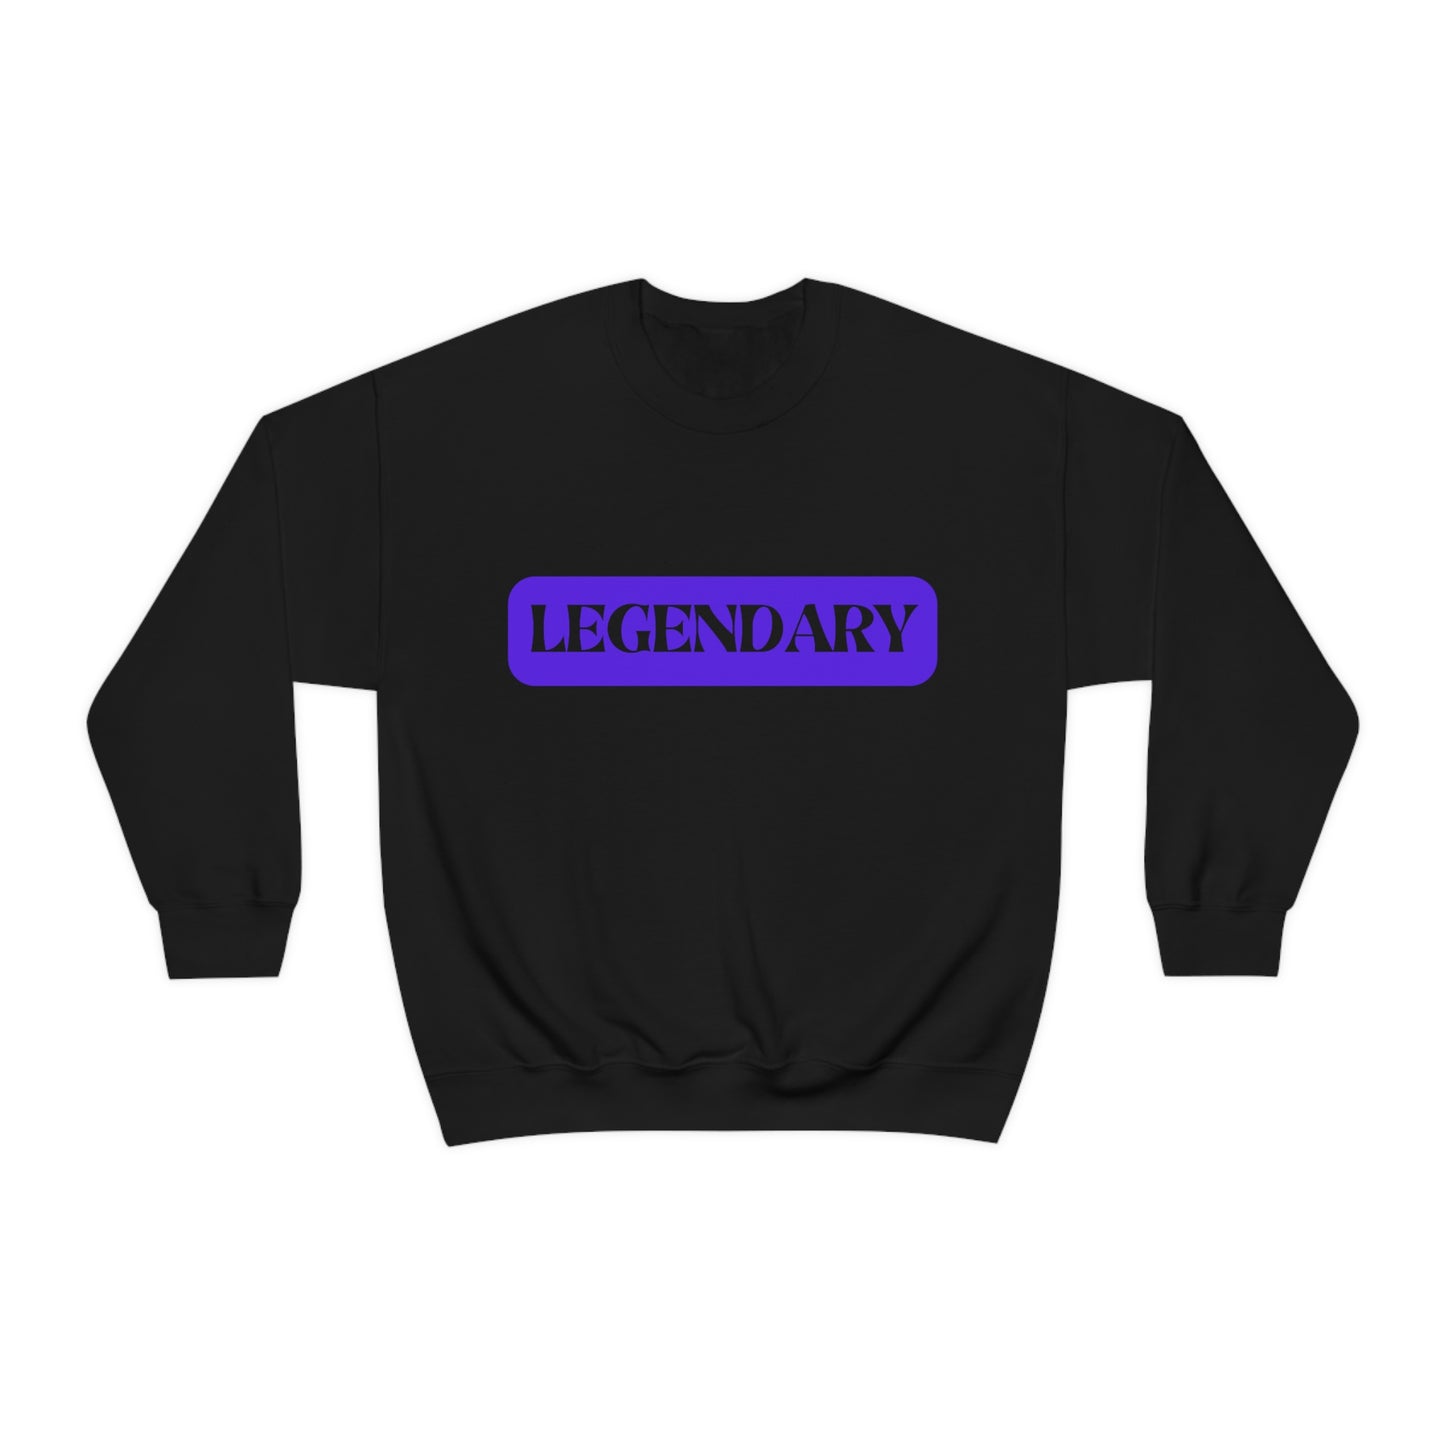 LEGENDARY: Unisex Crewneck Sweatshirt